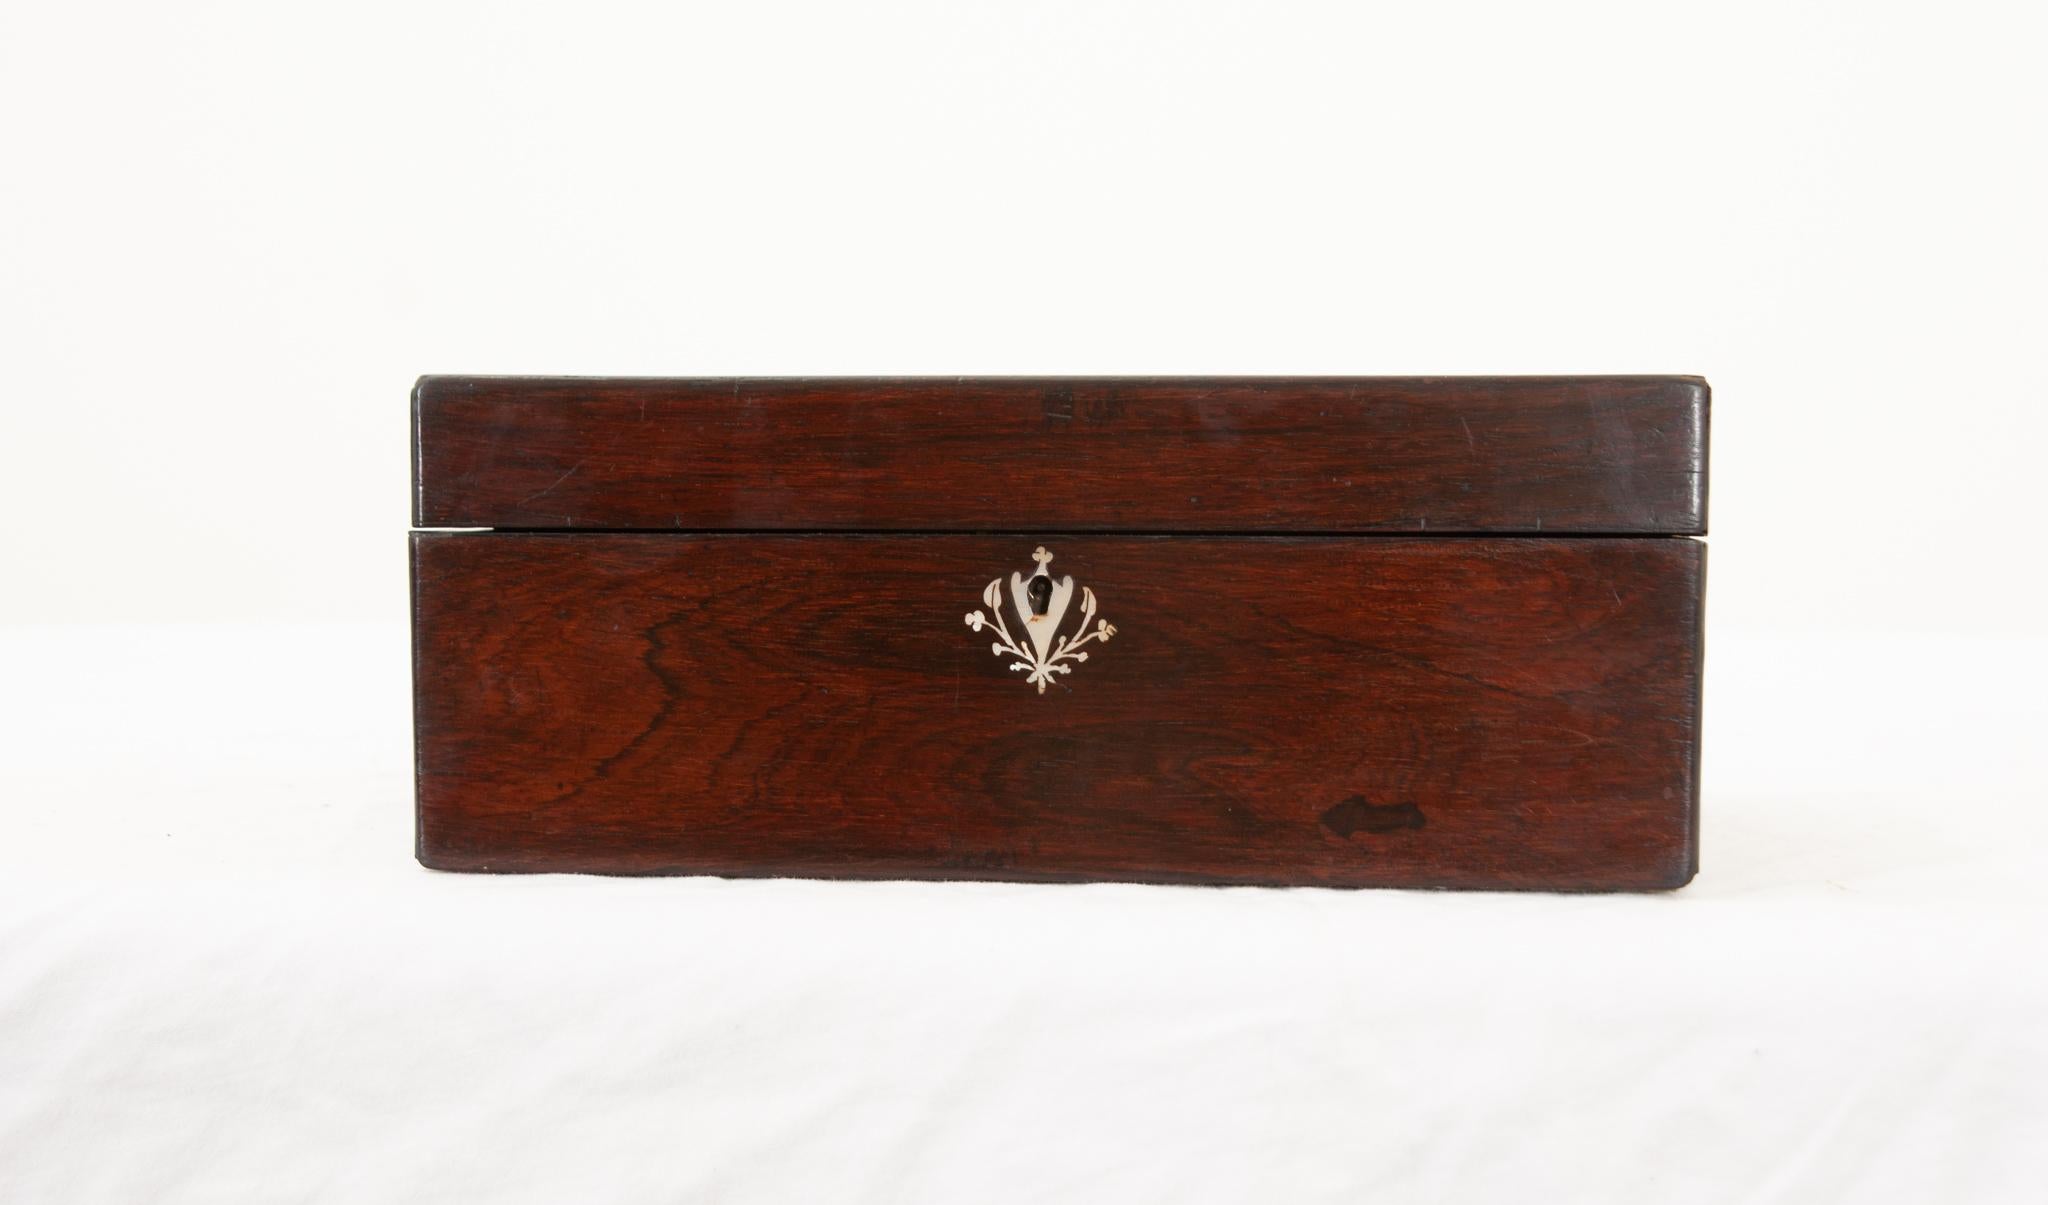 Hand-Carved English 19th Century Jewelry Box